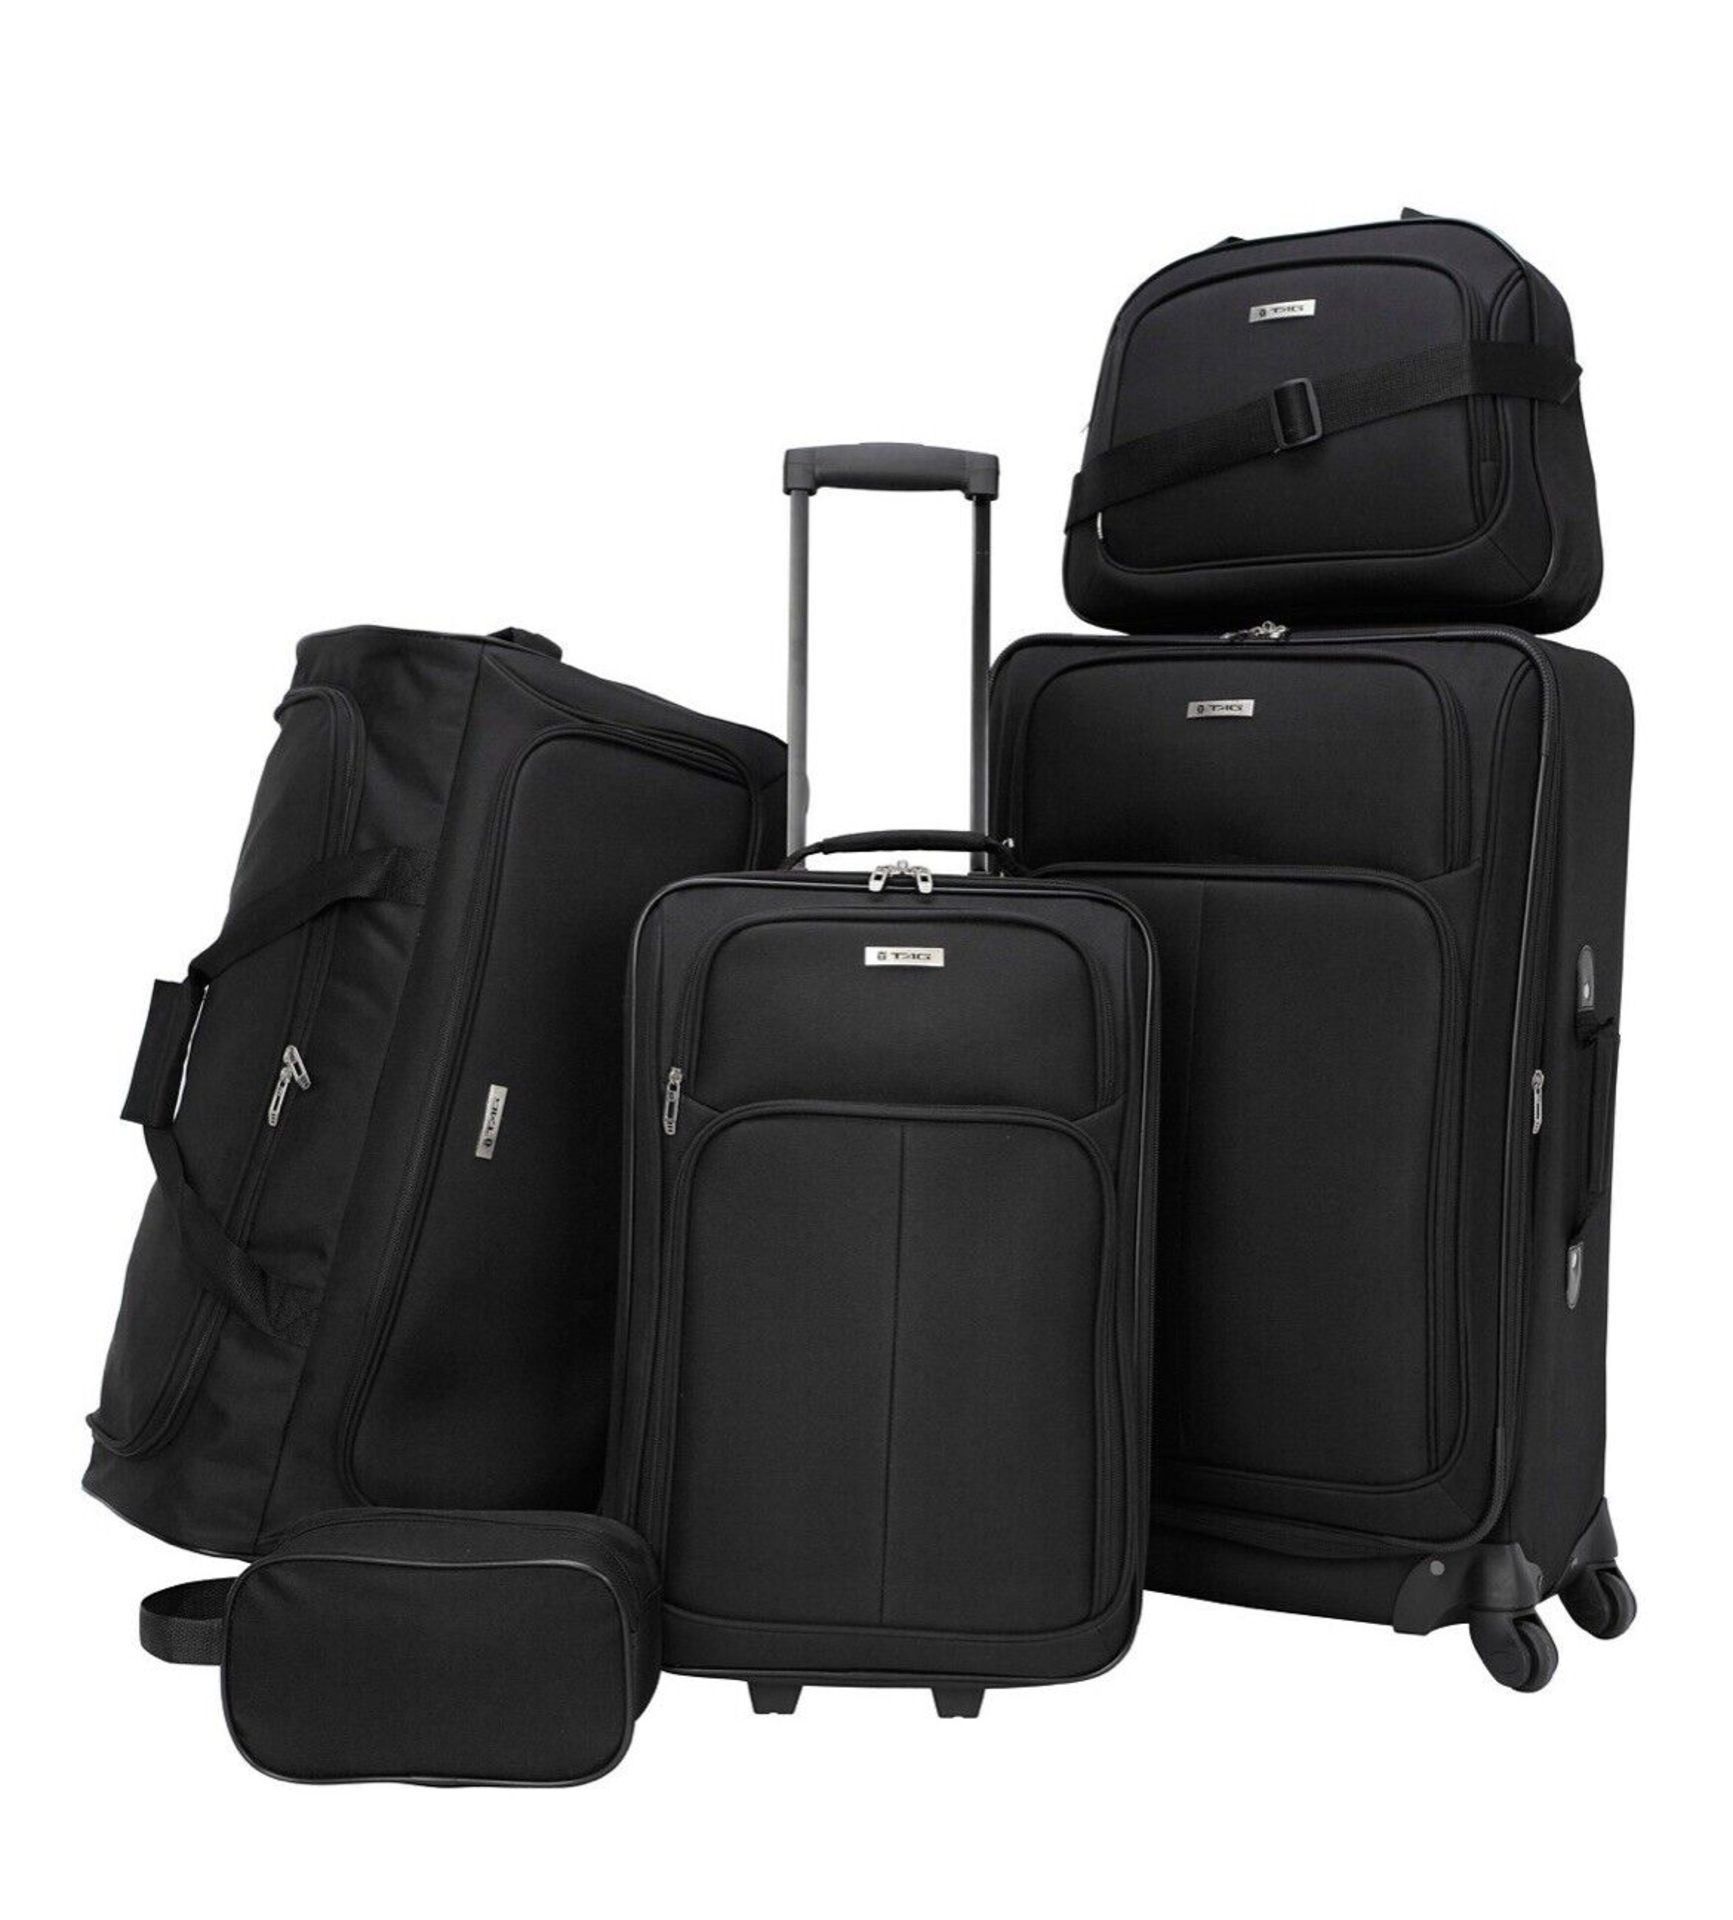 5 x Brand New Set OF TAG Ridgefield Black 5 Piece Softside Luggage Set. RRP $300. This classic set